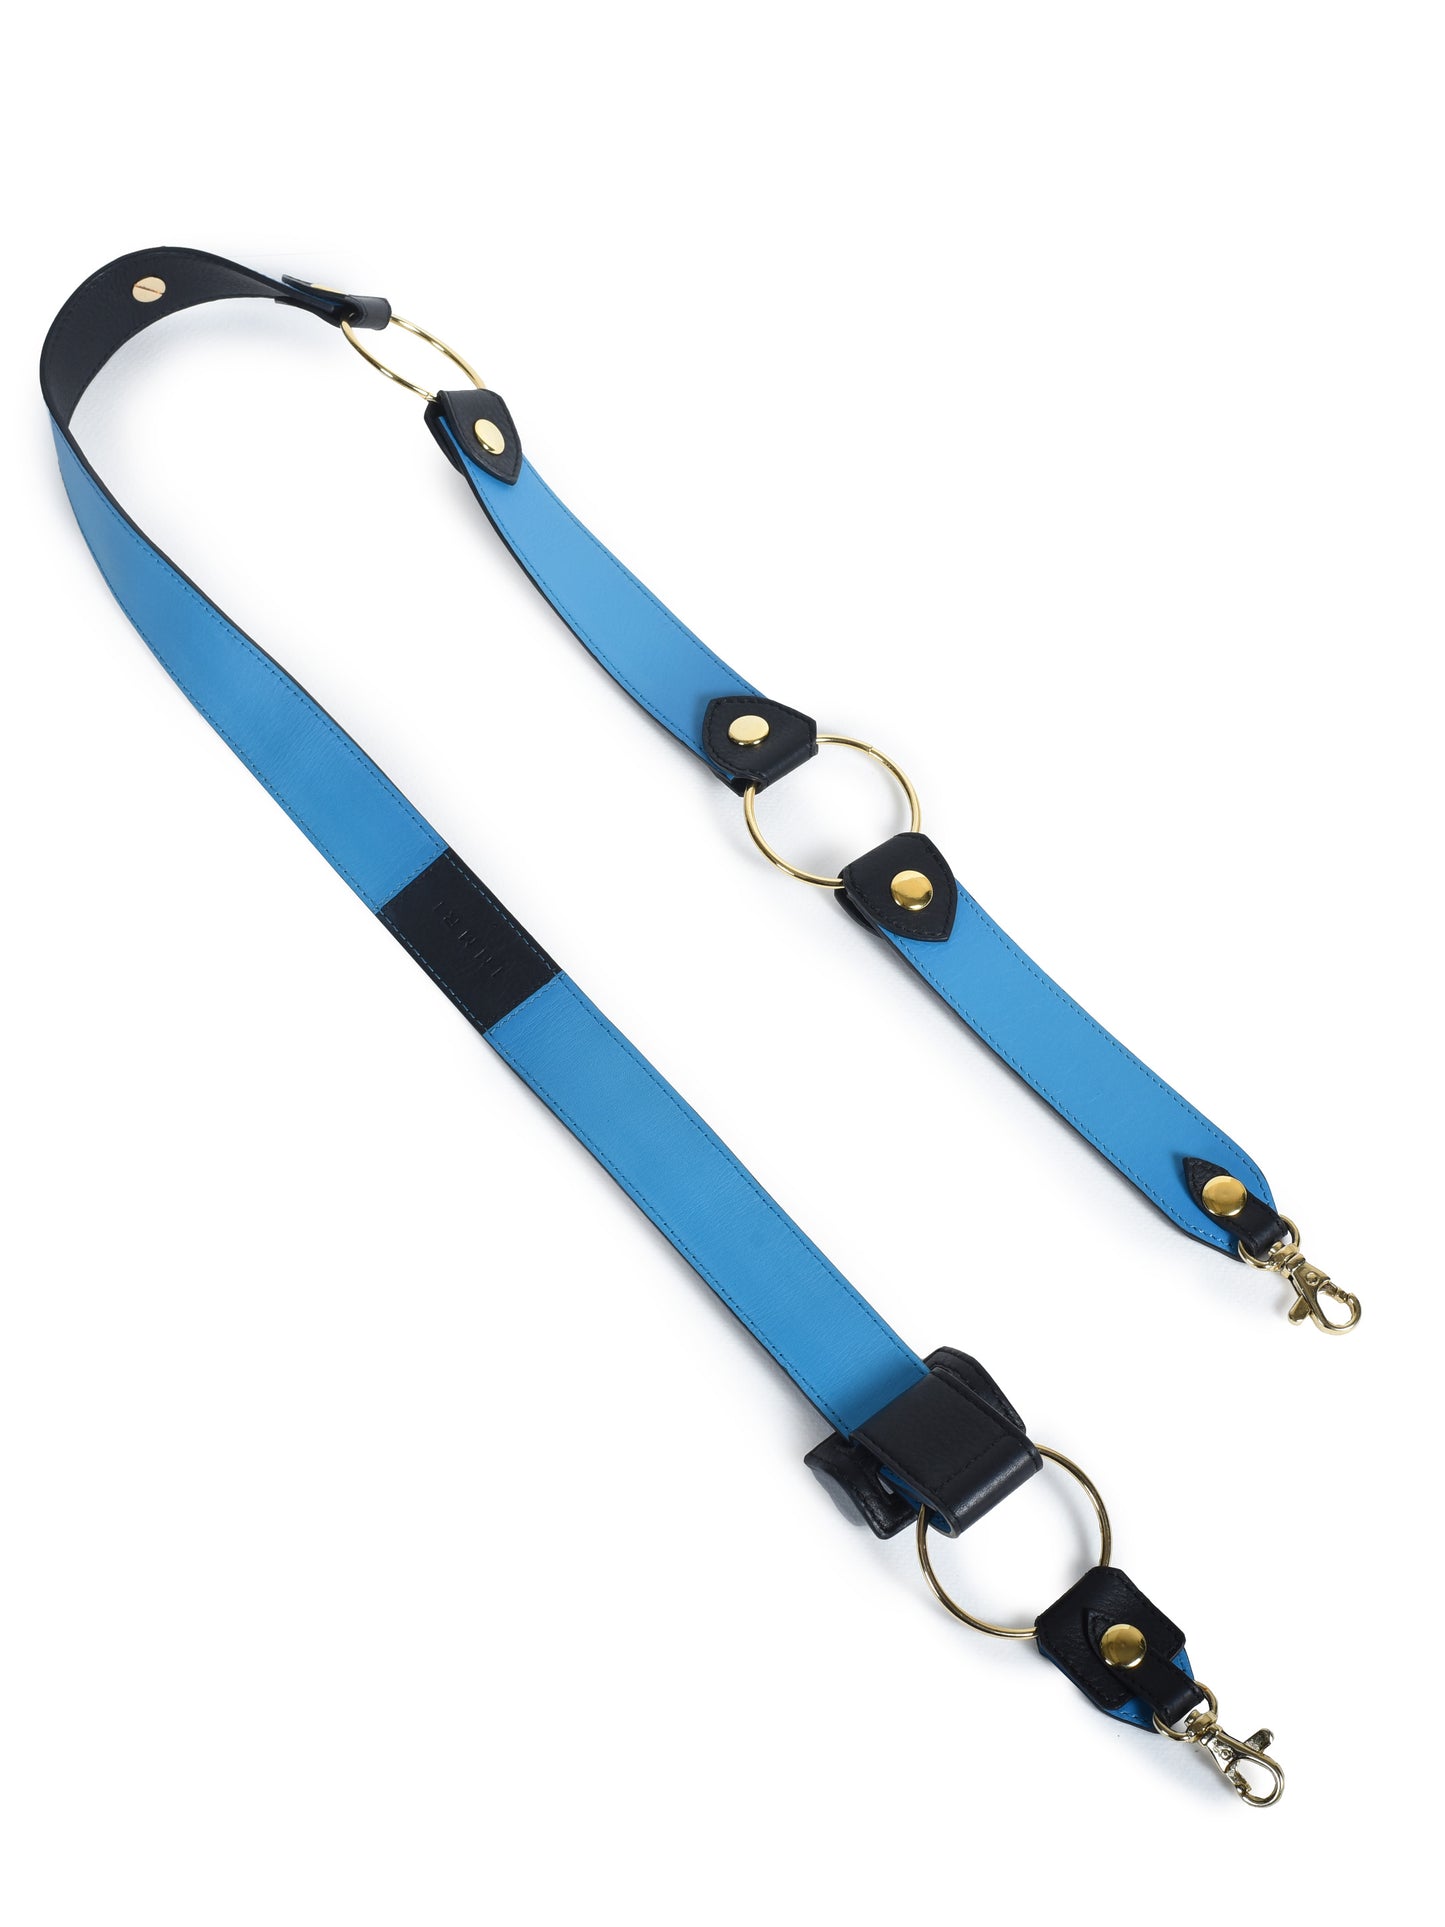 Strap Belt and Essential Batua with Earpod Case